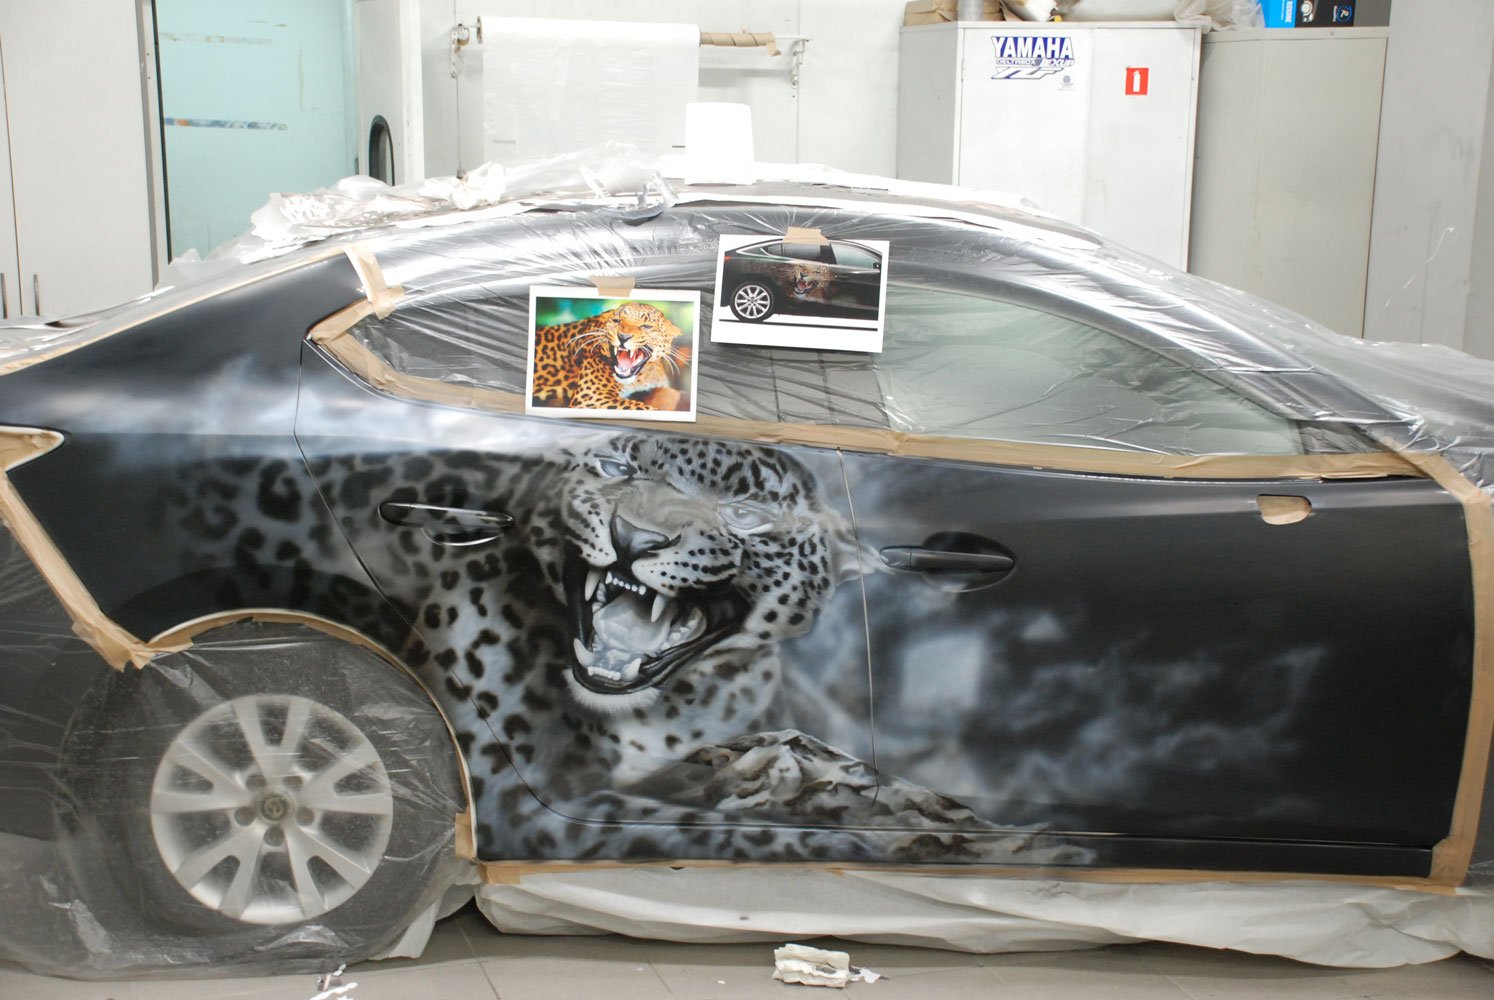 нарисованный леопард на авто